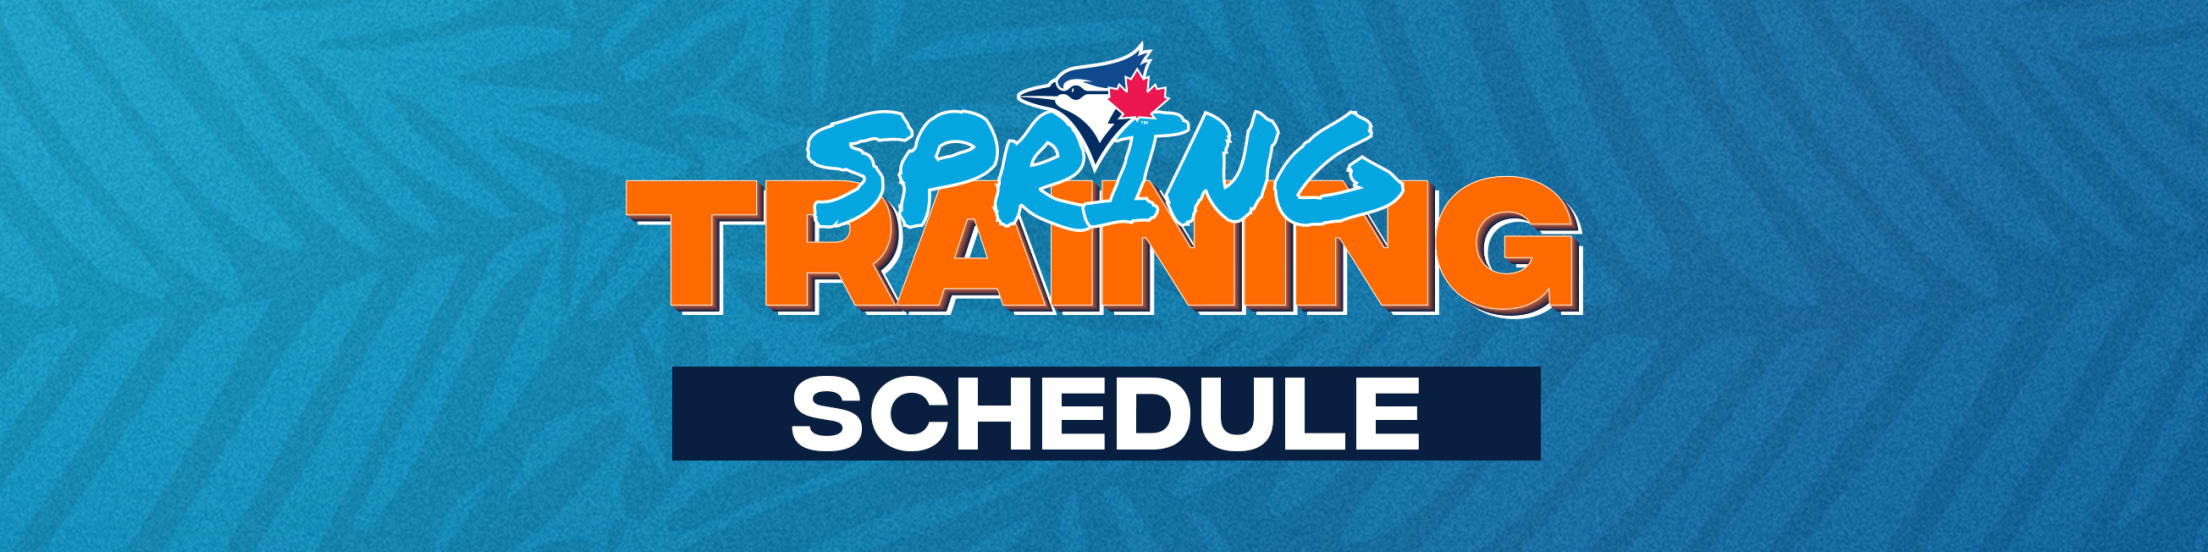 Spring Training Schedule Toronto Blue Jays